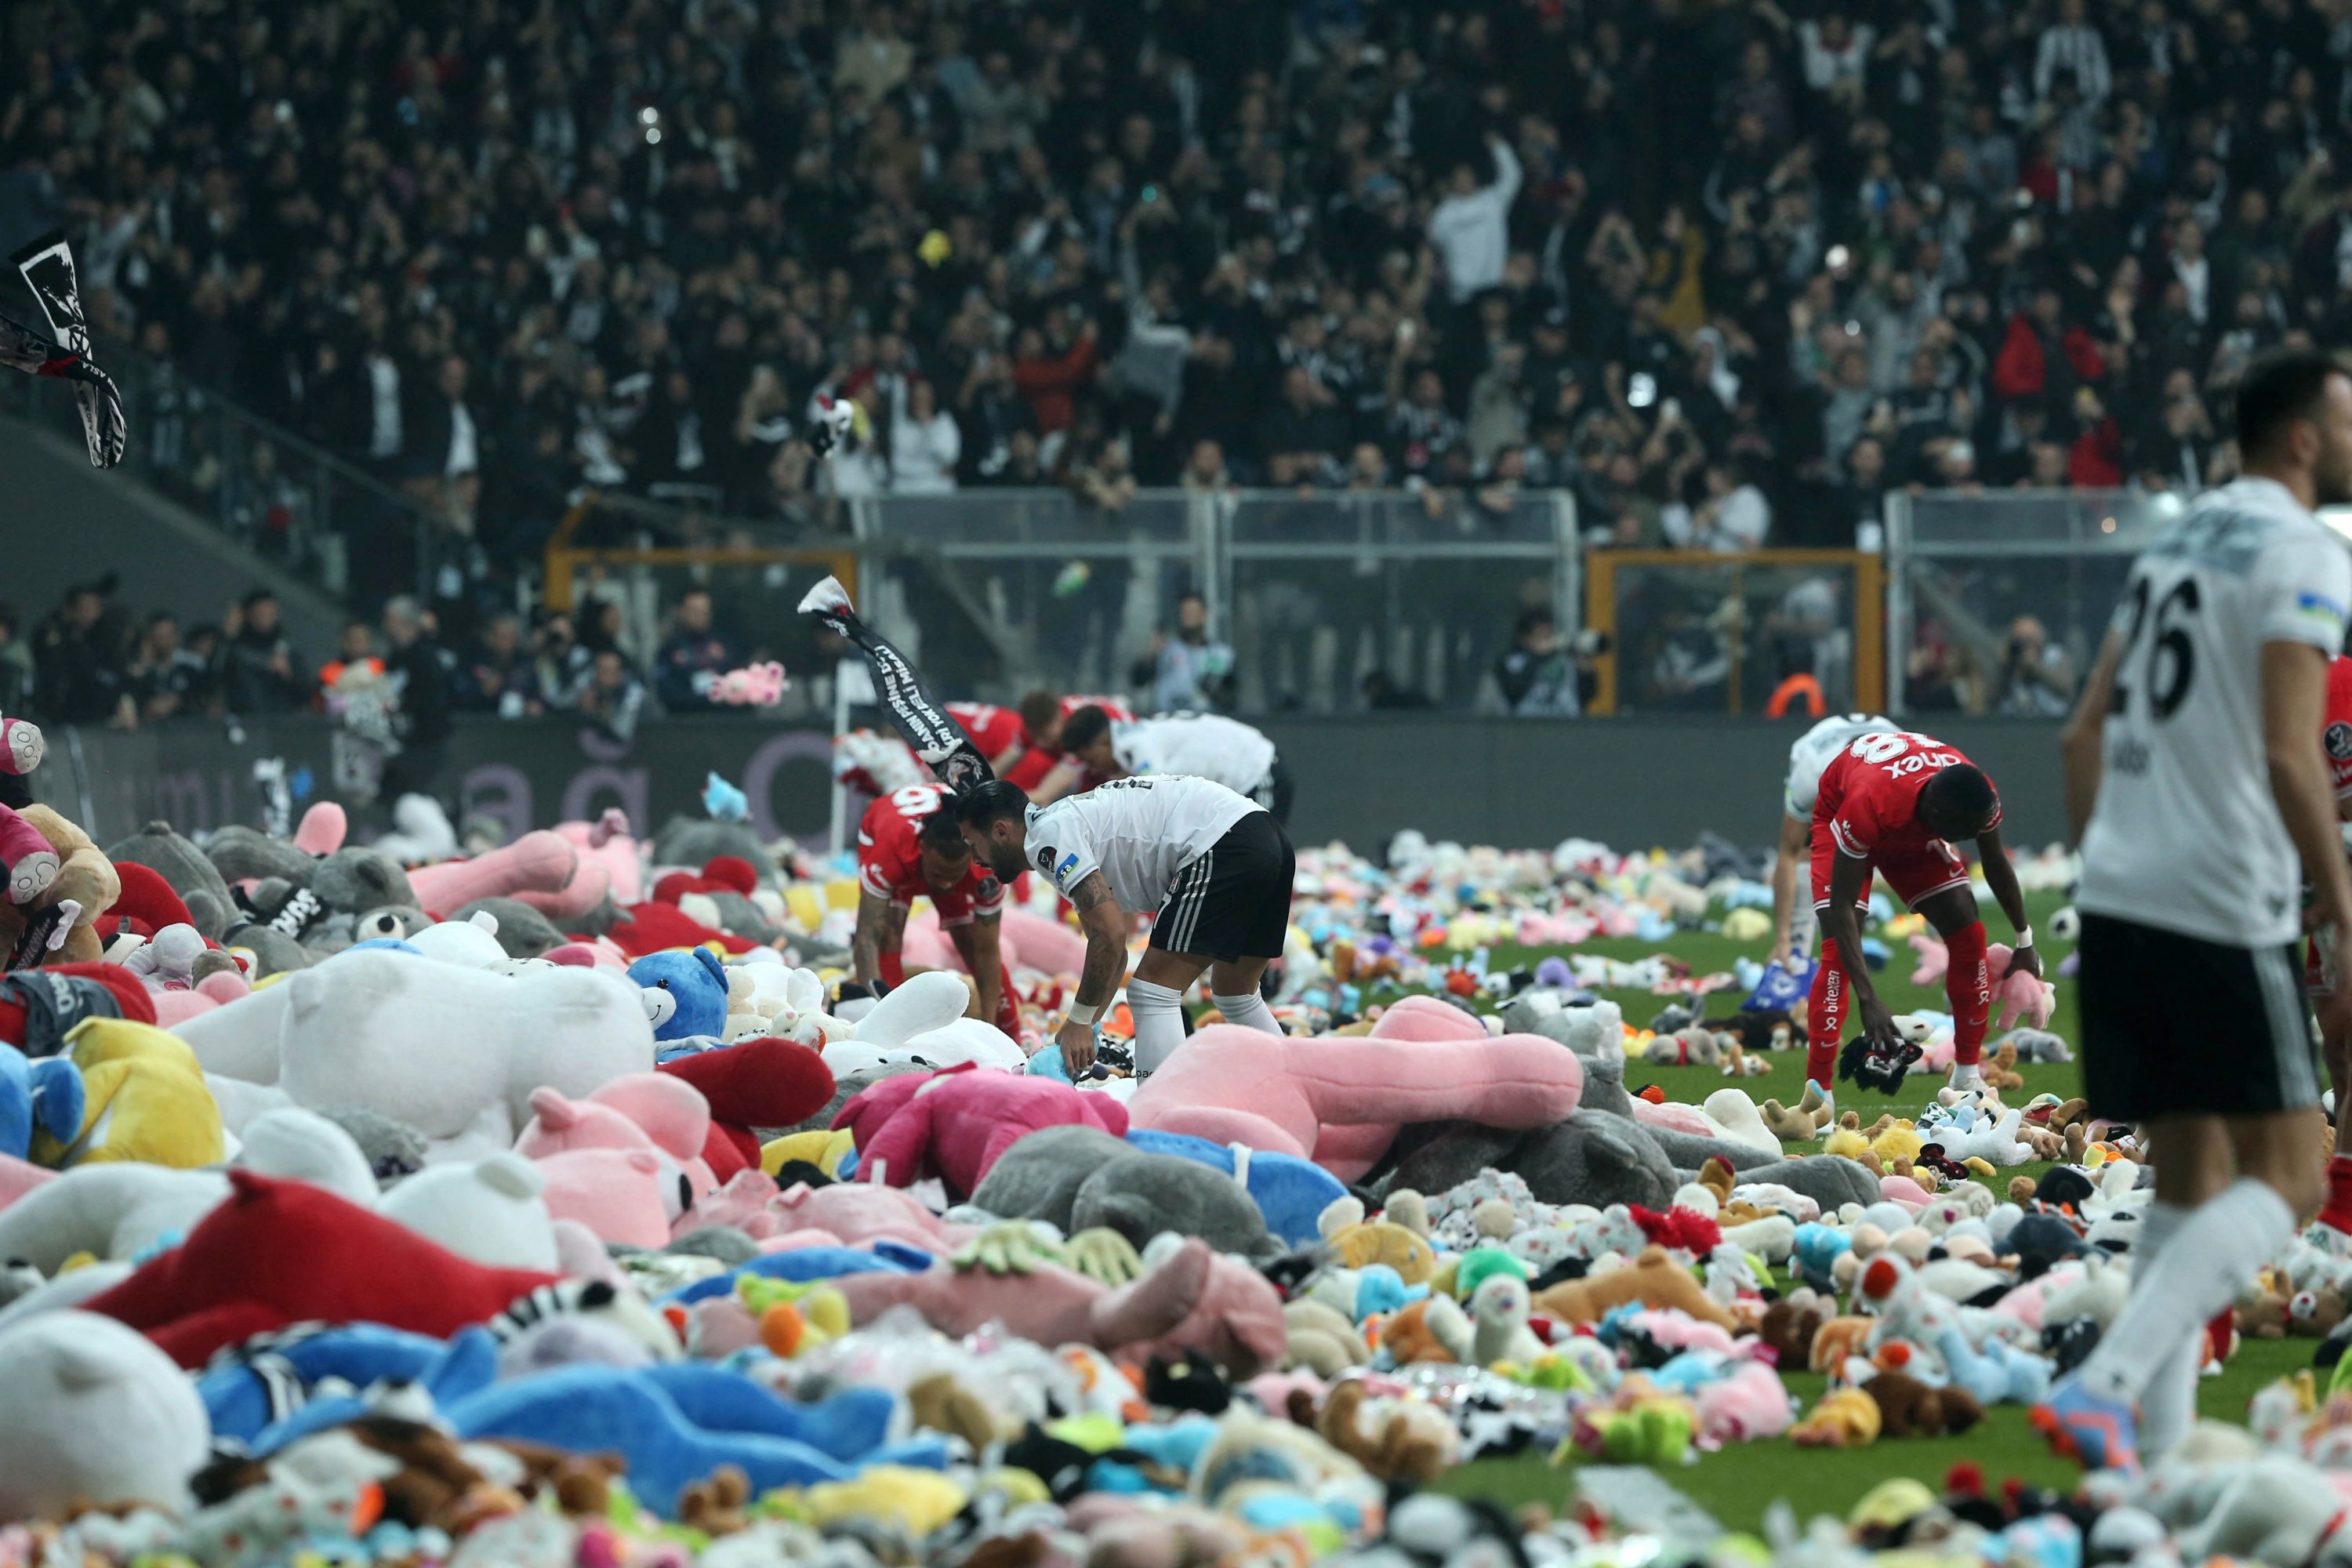 Para pemain mengumpulkan mainan dan boneka beruang dari lapangan saat para penggemar Beşiktaş melemparkannya selama pertandingan sepak bola Süper Lig Turki antara Beşiktaş dan Antalyaspor di stadion Vodafone, Istanbul, Türkiye, 26 Februari 2023. (Foto DHA)